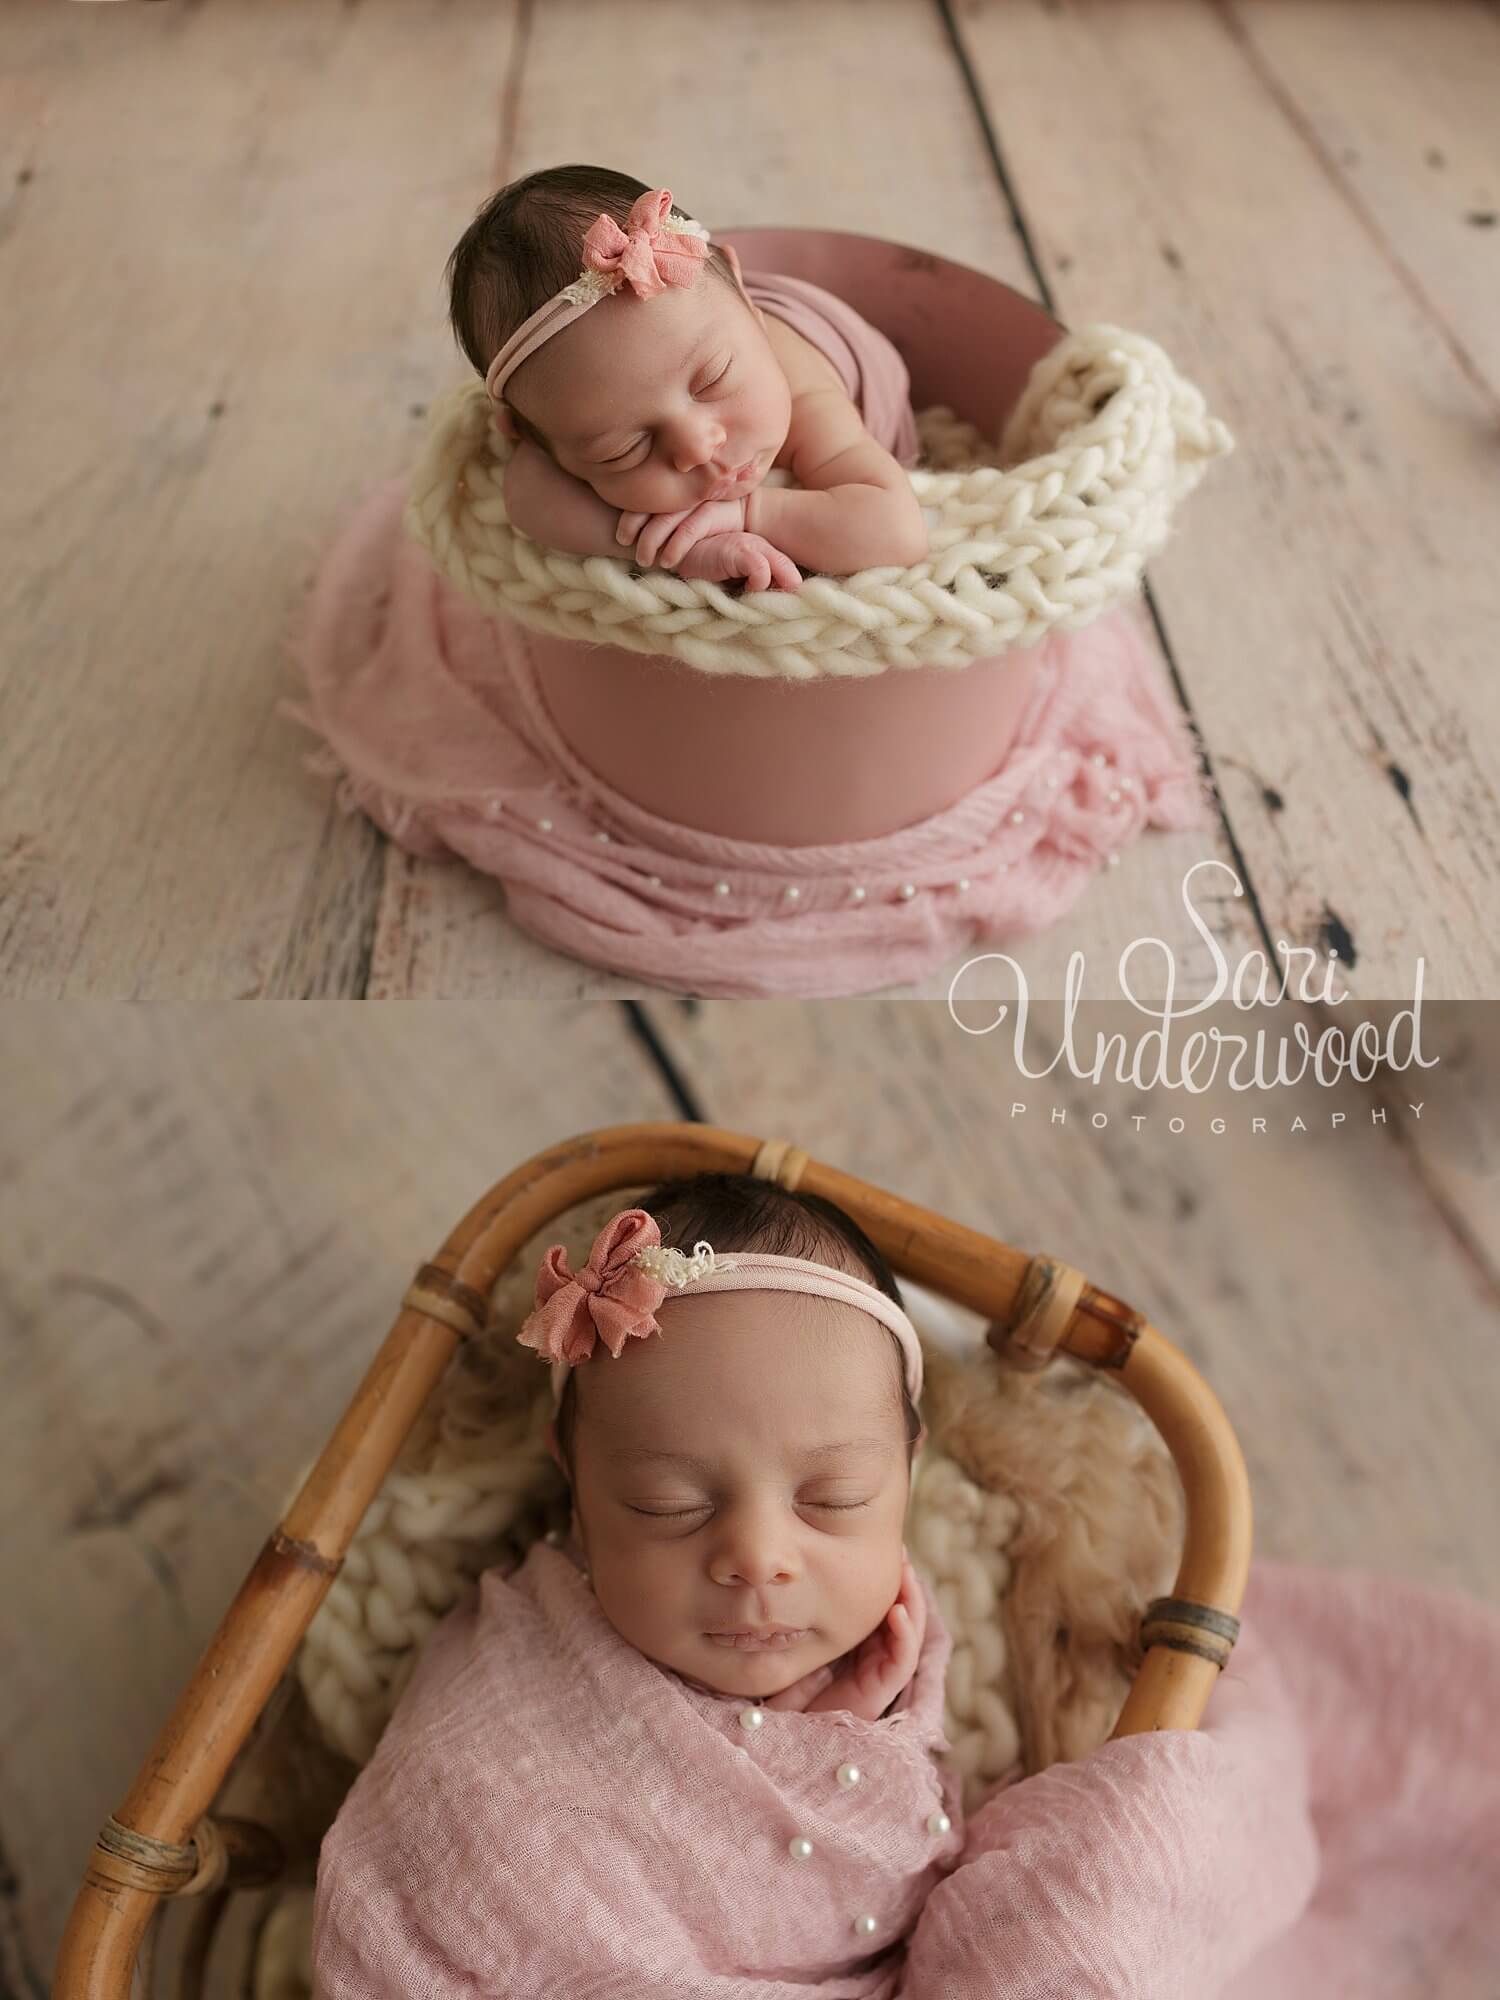 posed newborn girl in bucket and basket